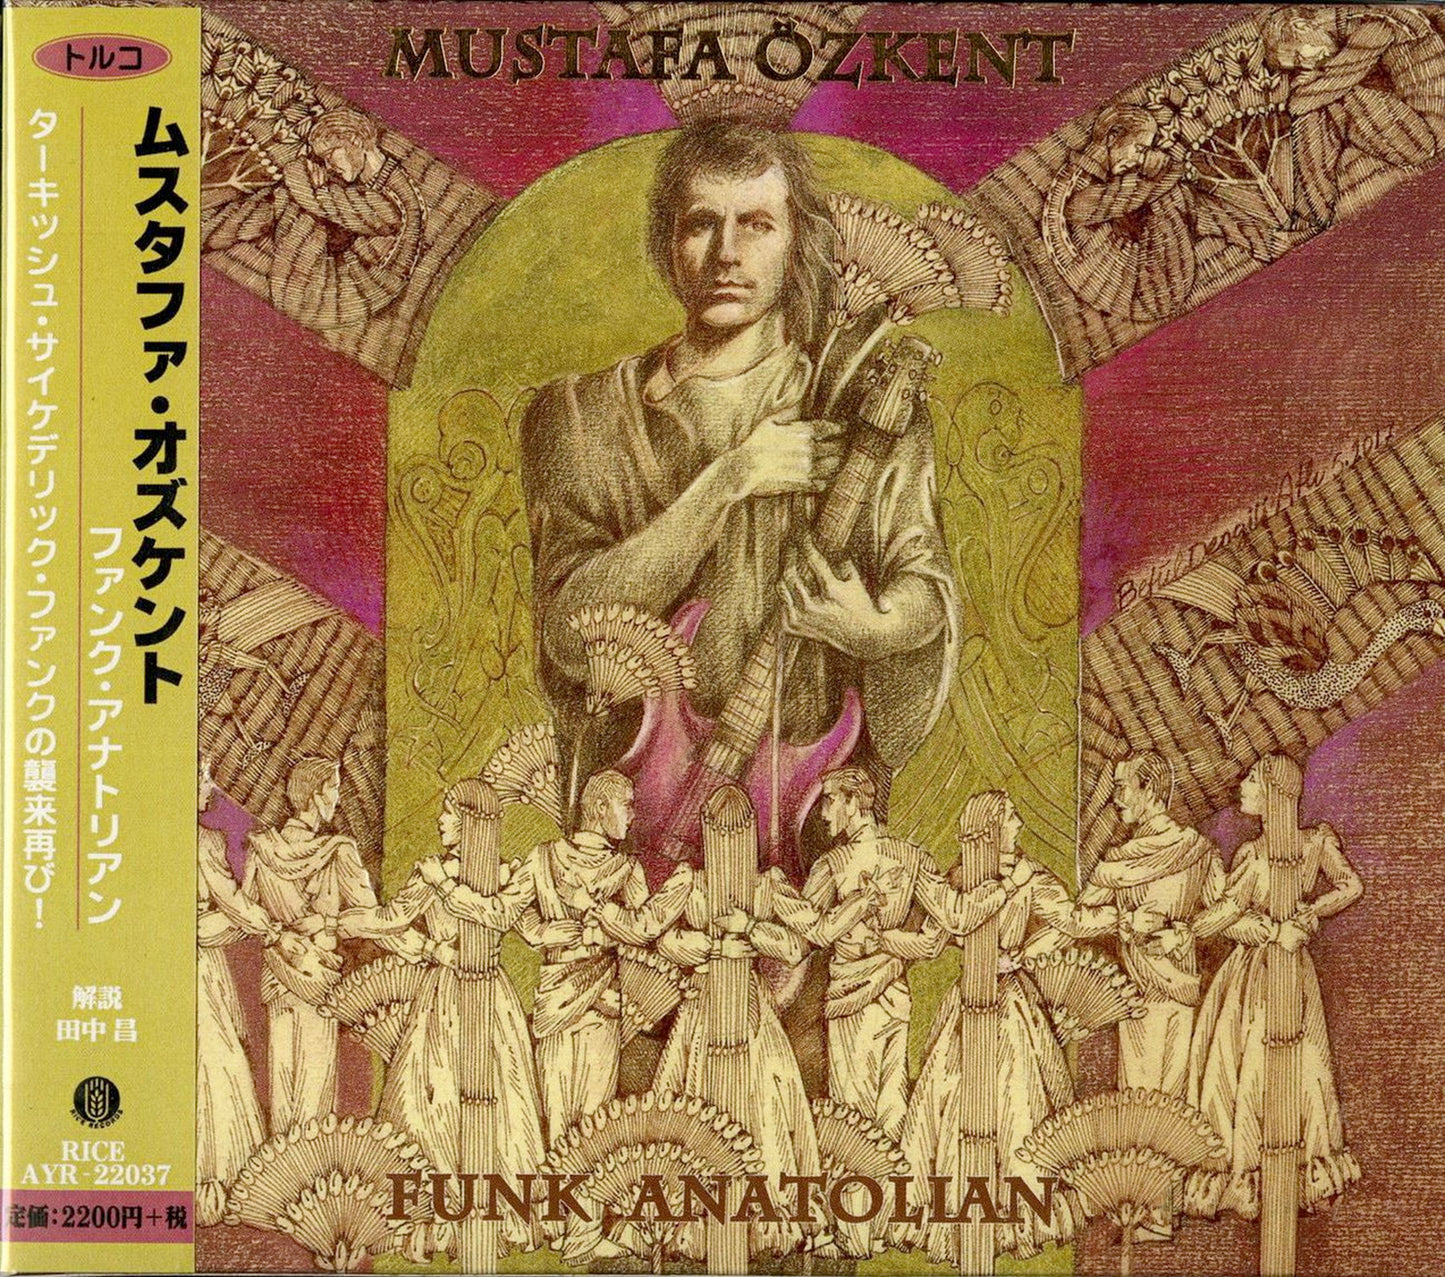 Mustafa Ozkent - Funk Anatolian - Japan CD